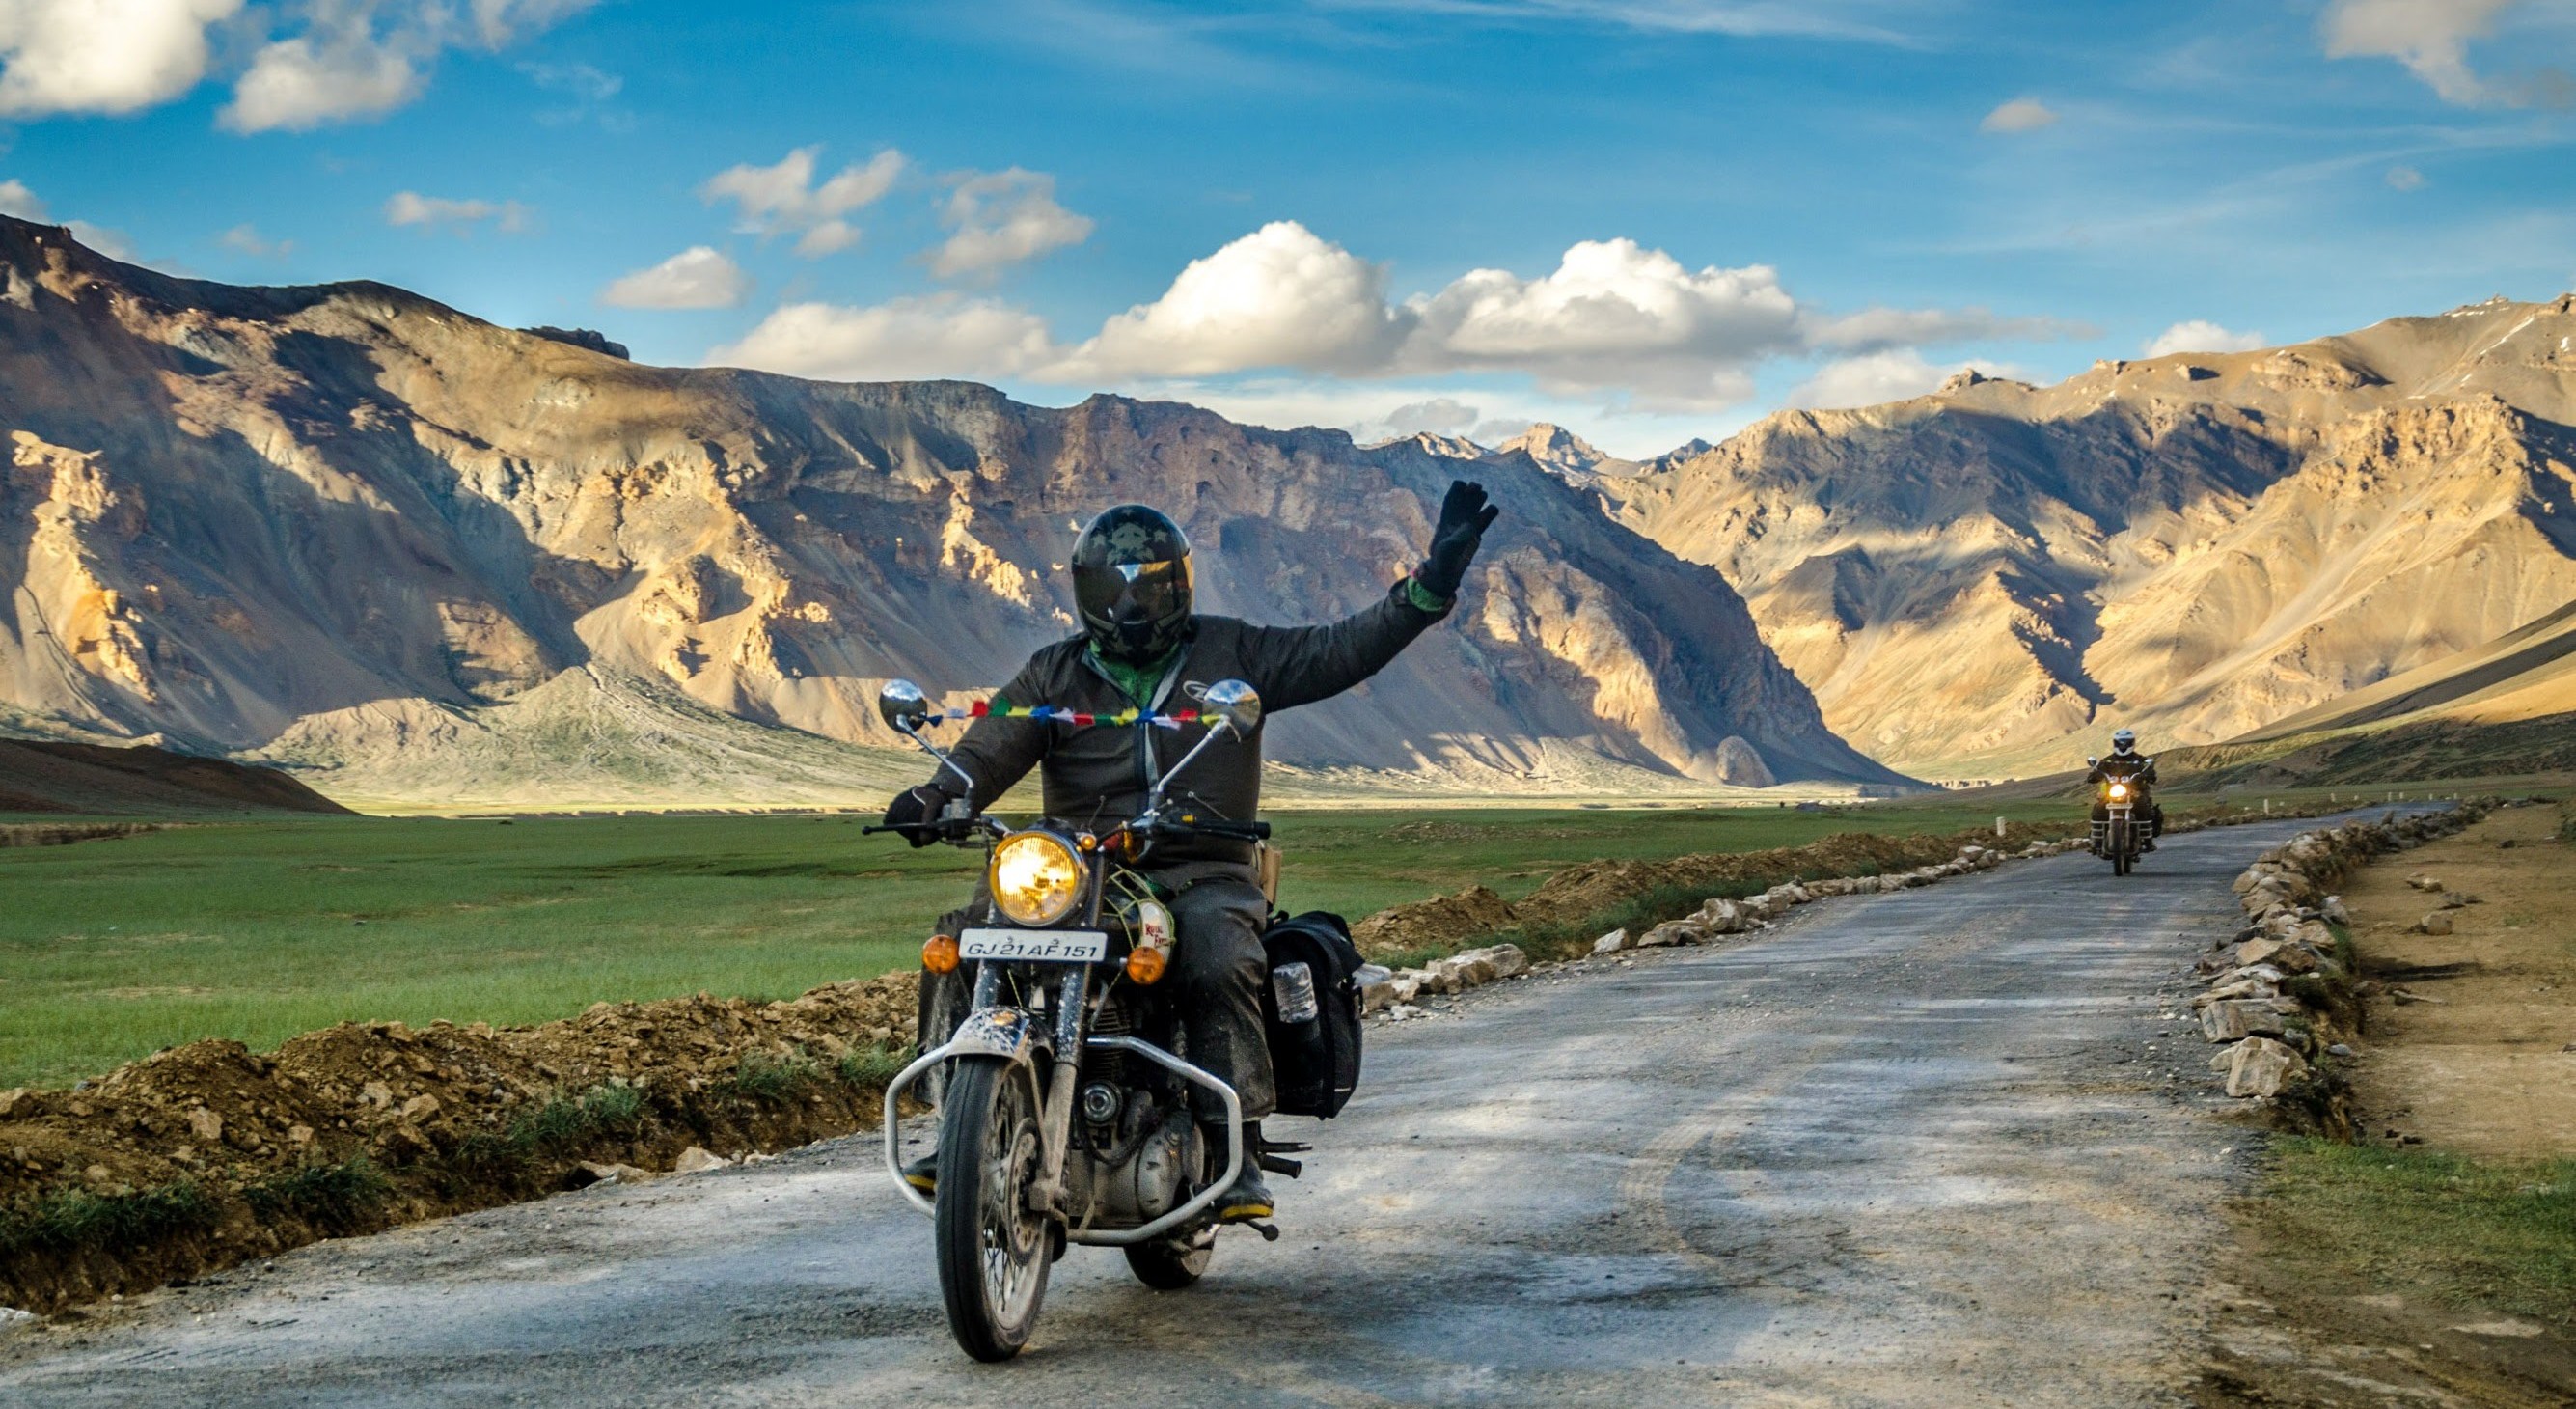 ladakh bike trip package from delhi